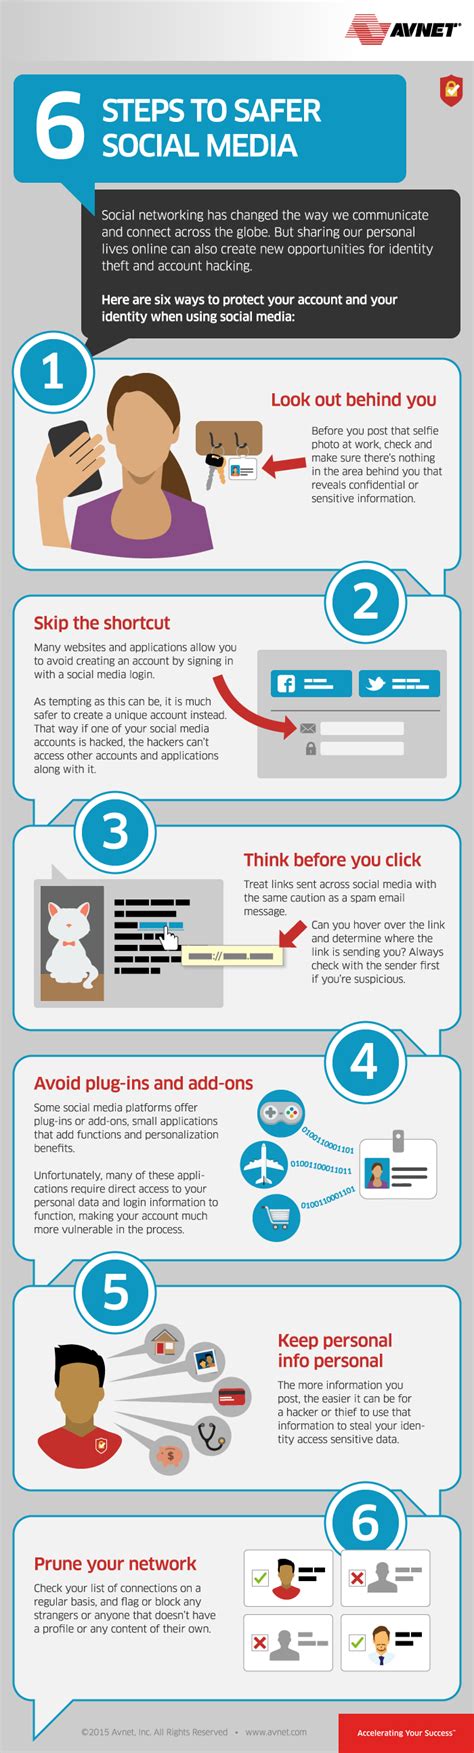 6 Steps To Safer Socialmedia Infographic Digital Information World